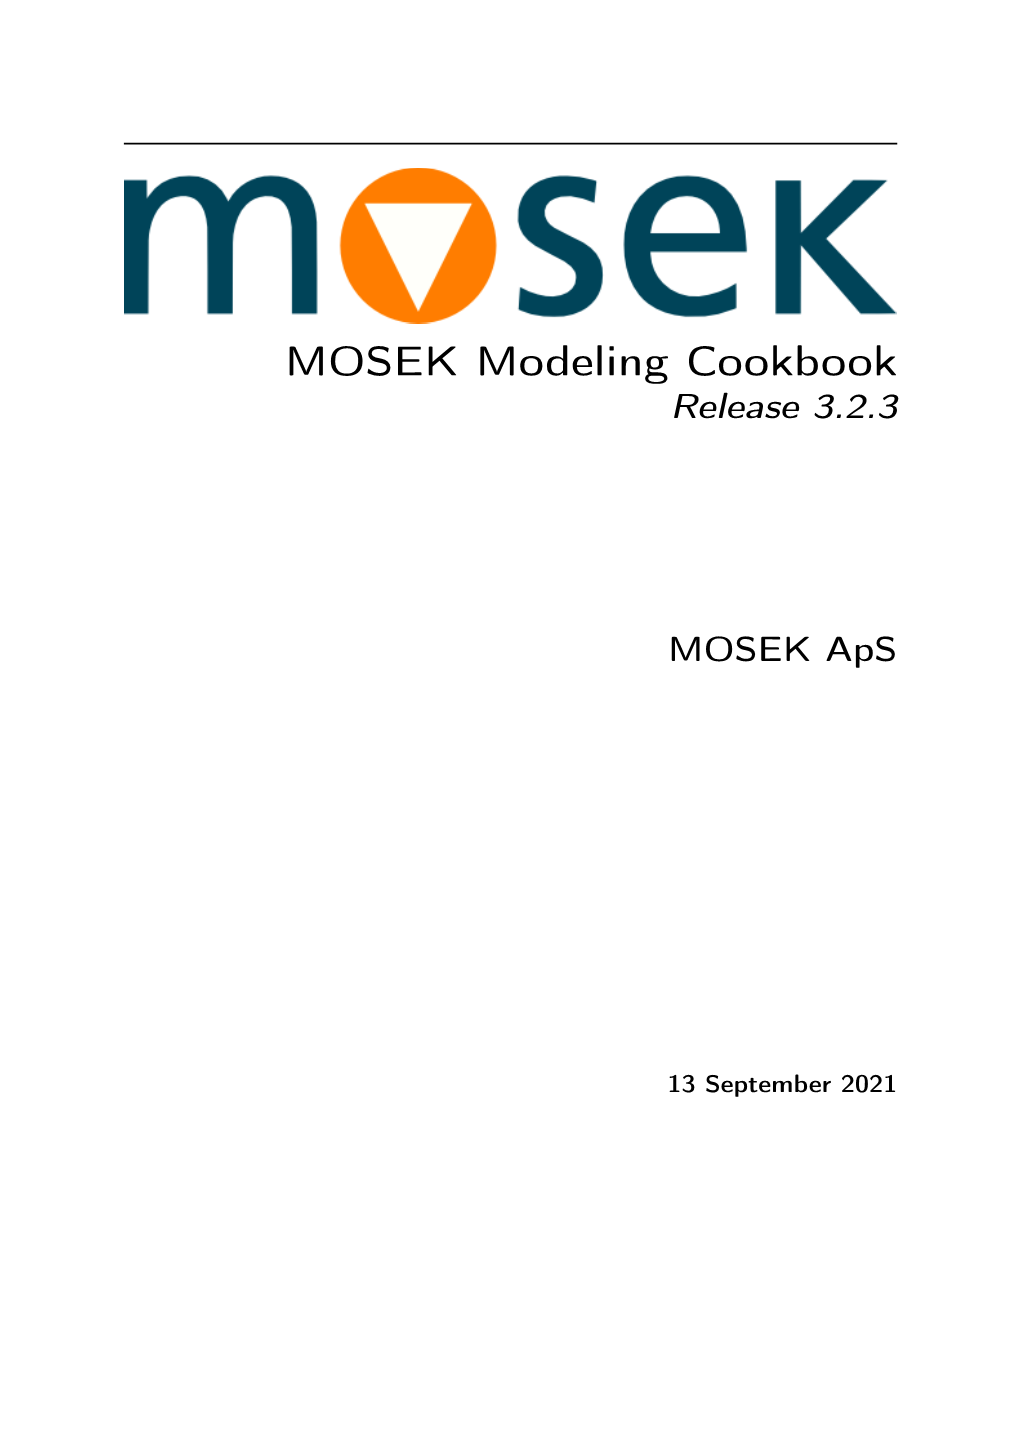 MOSEK Modeling Cookbook Release 3.2.3